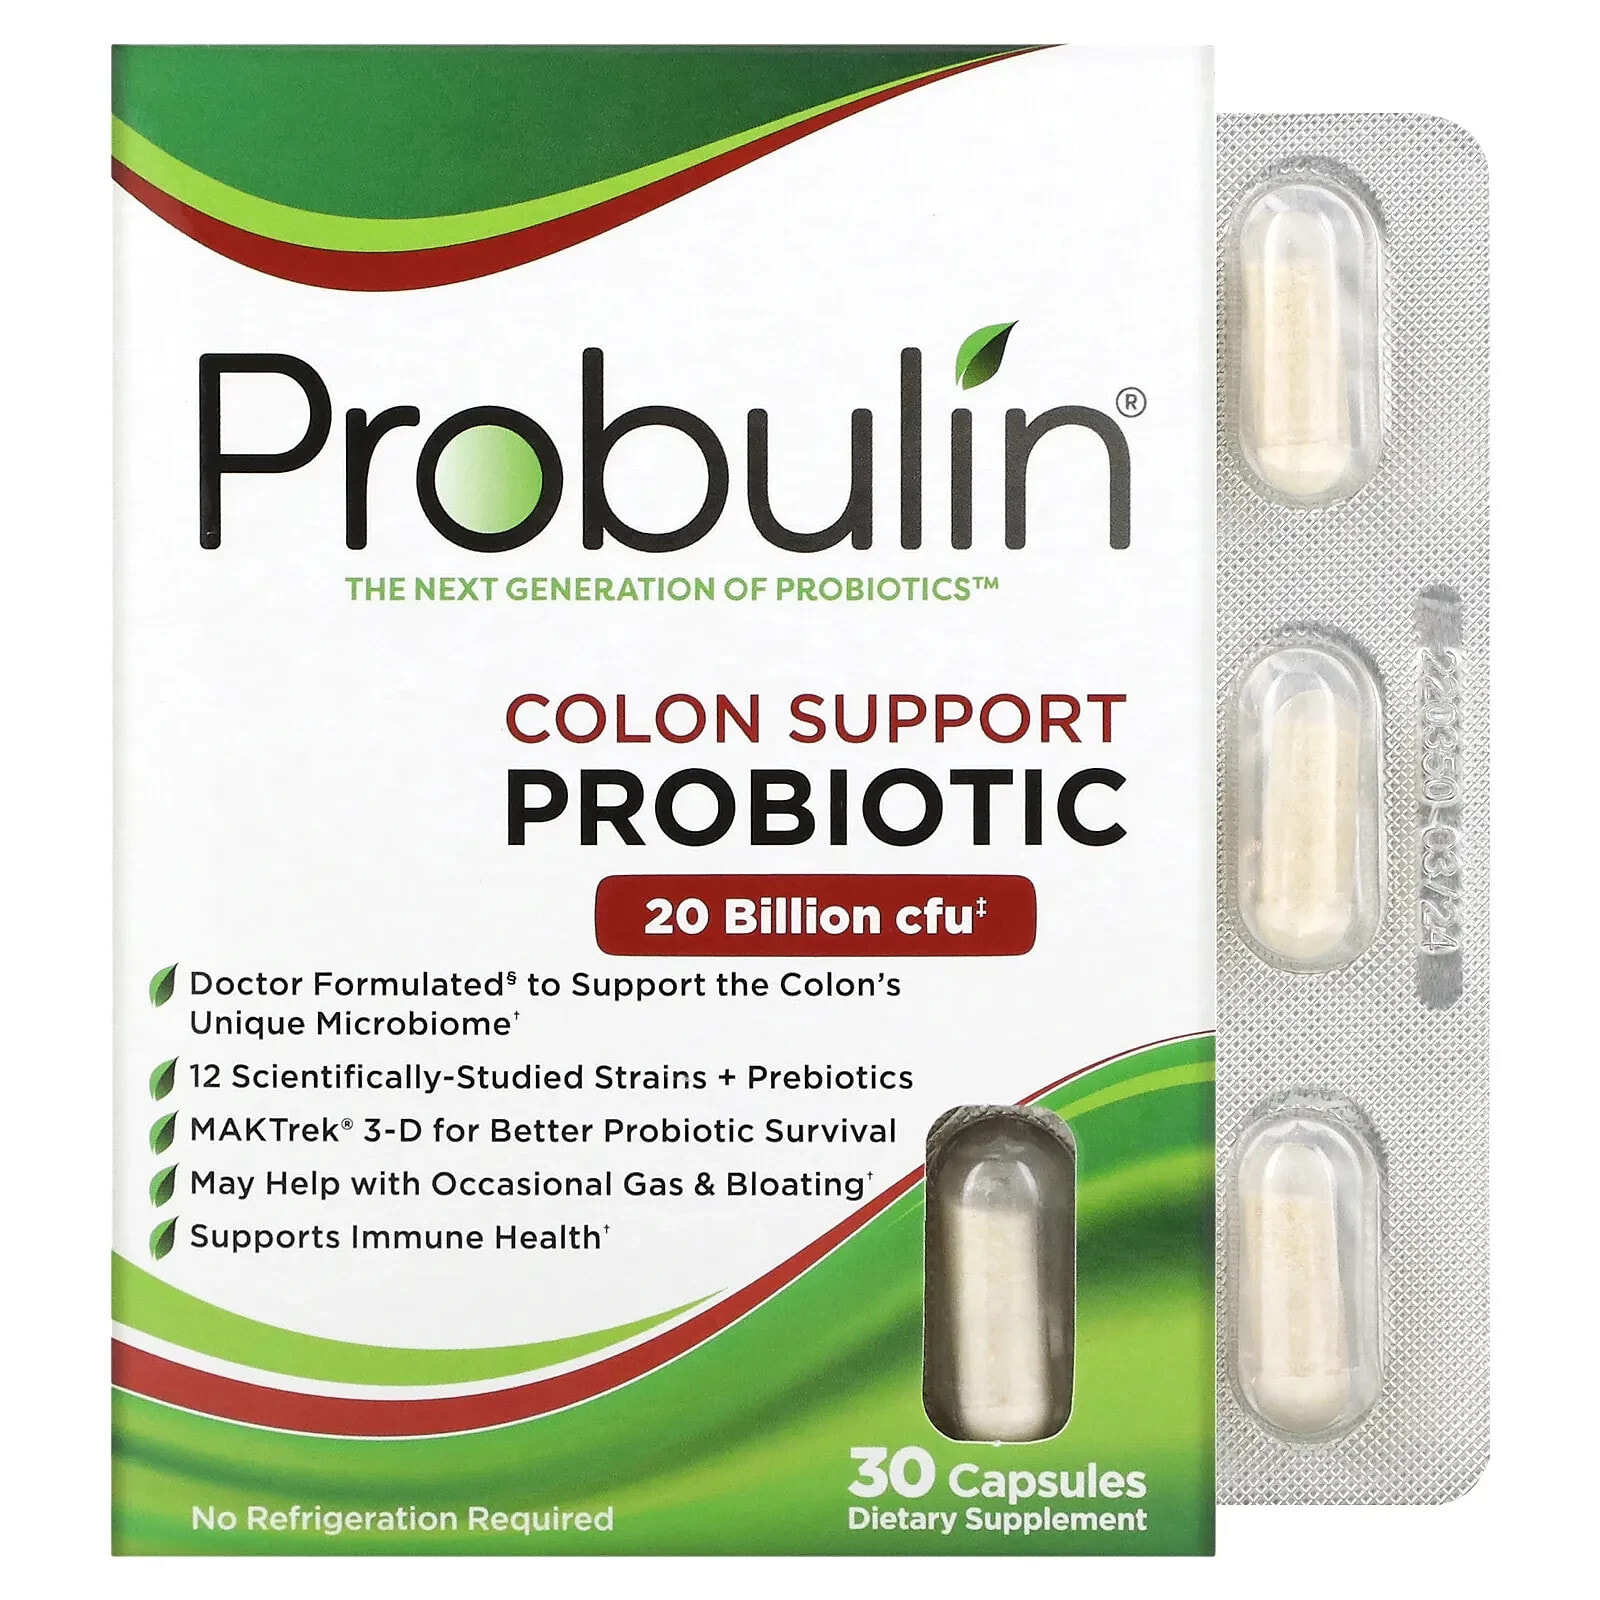 Probulin, Пробиотик для поддержки кишечника, 20 млрд КОЕ, 60 капсул